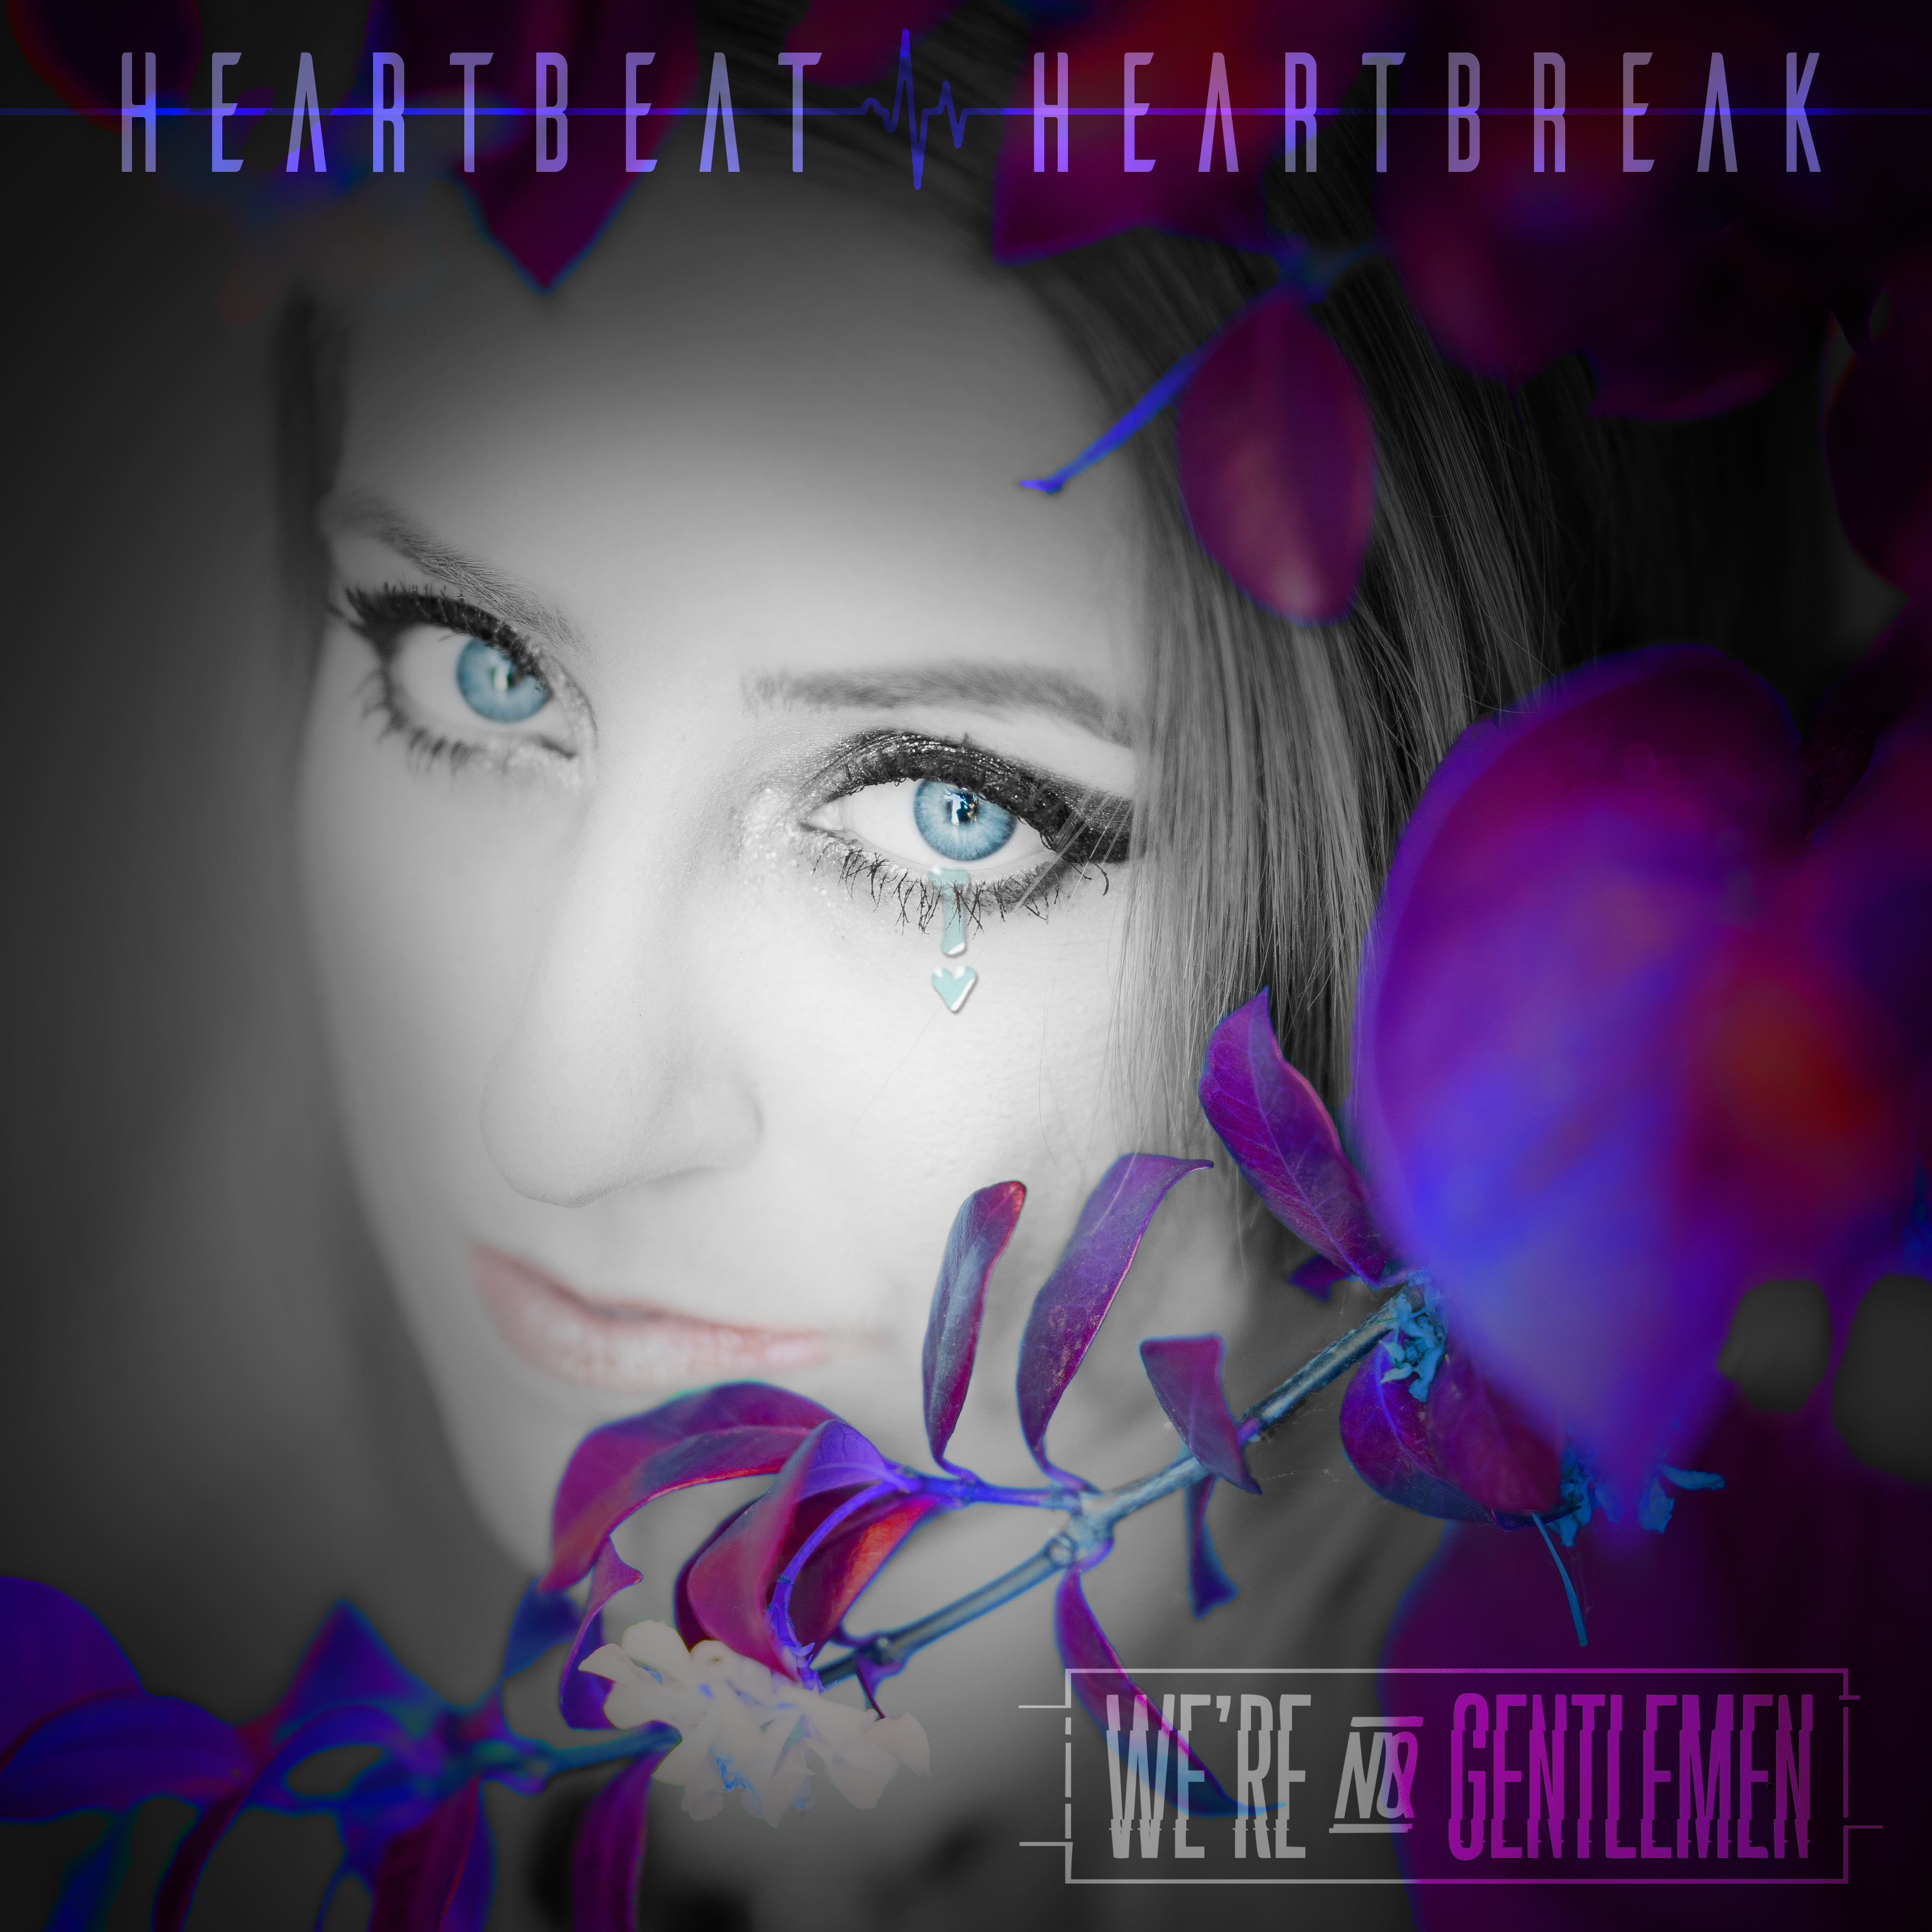 Danny Knapp Melonhead Heartbeat Heartbreak Album Cover